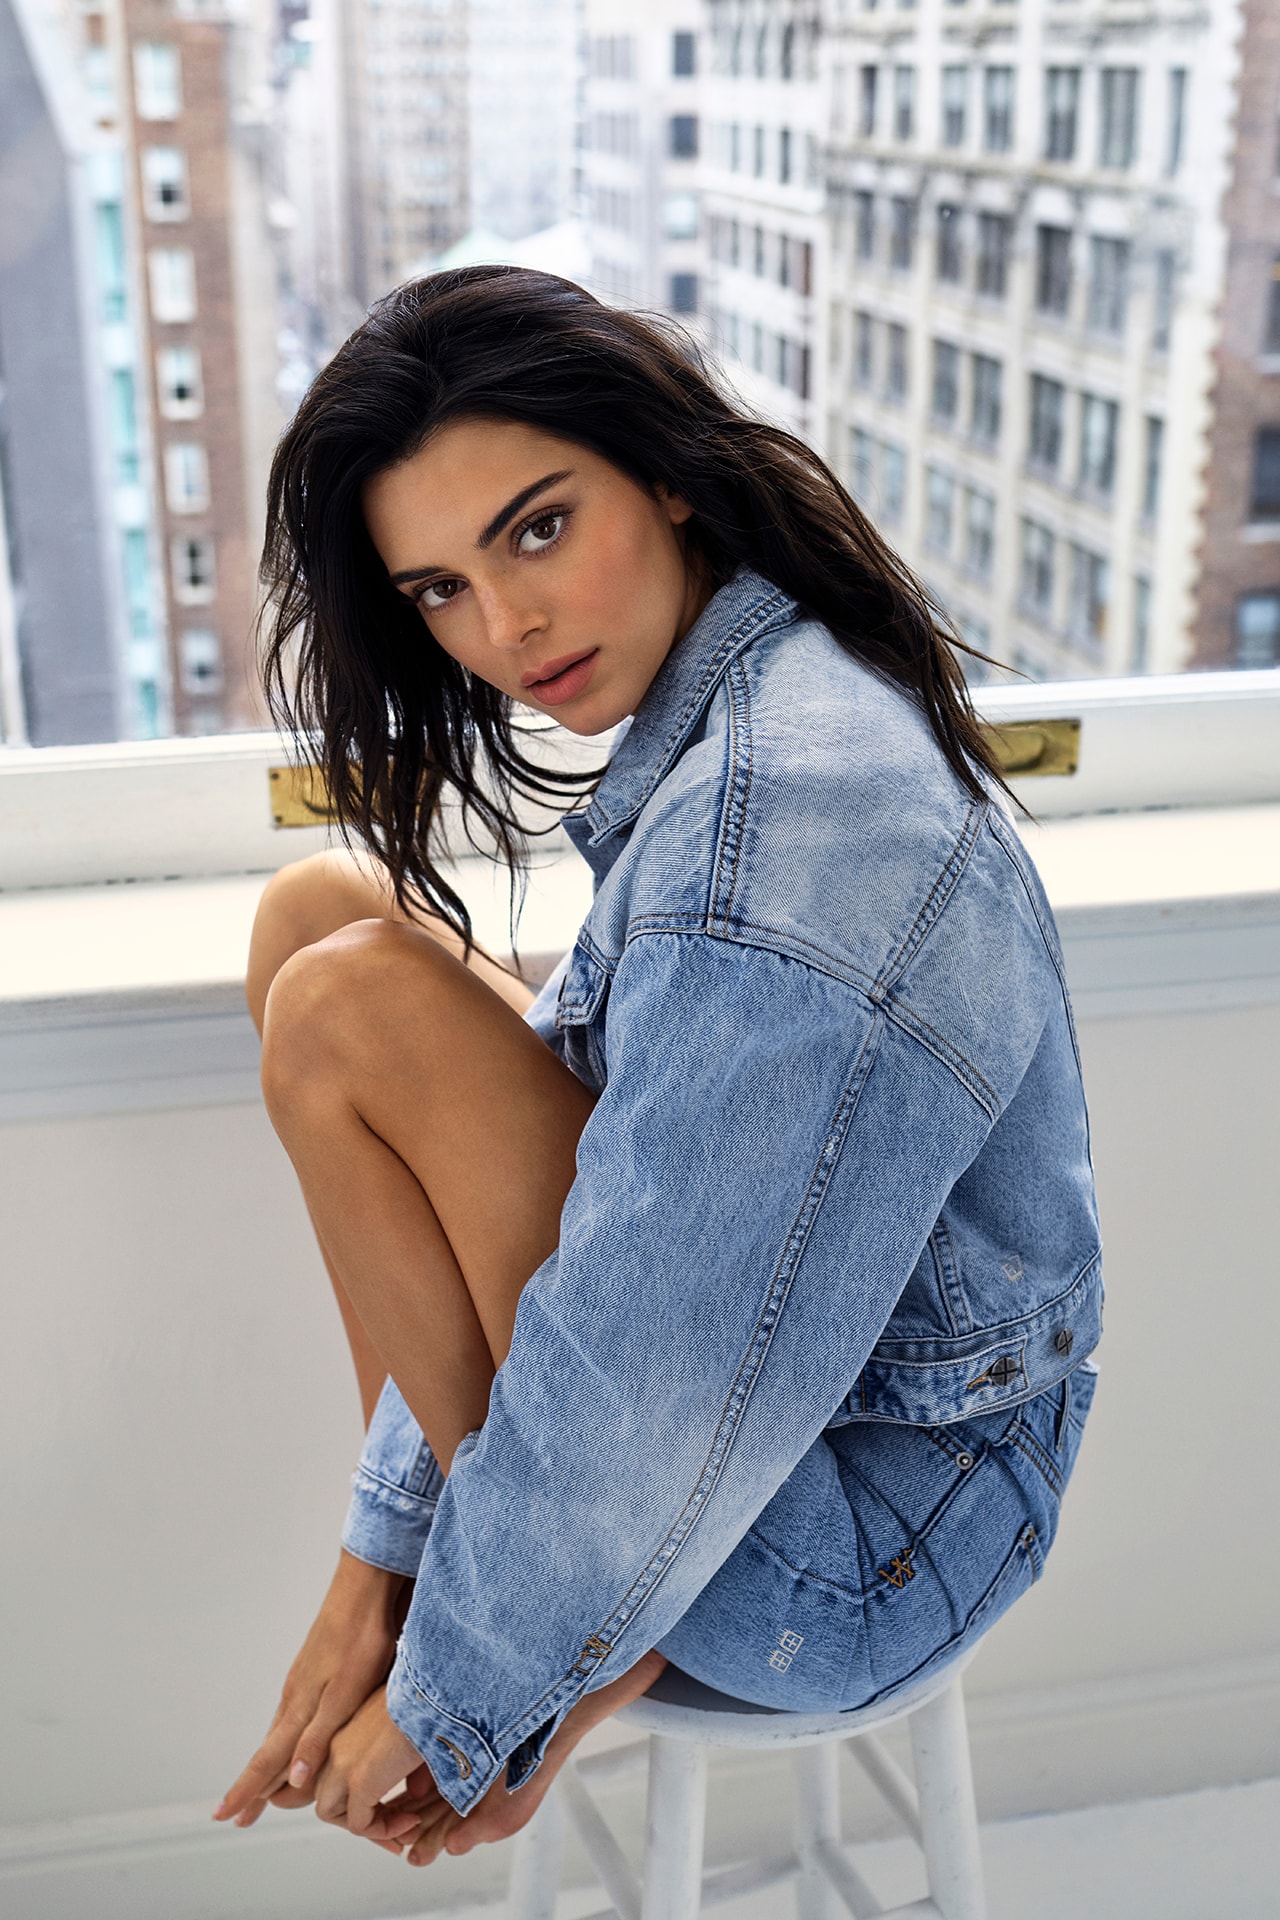 Kendall Jenner ksubi Jeans Fall 2019 Capsule Campaign Model Denim Blue Jacket